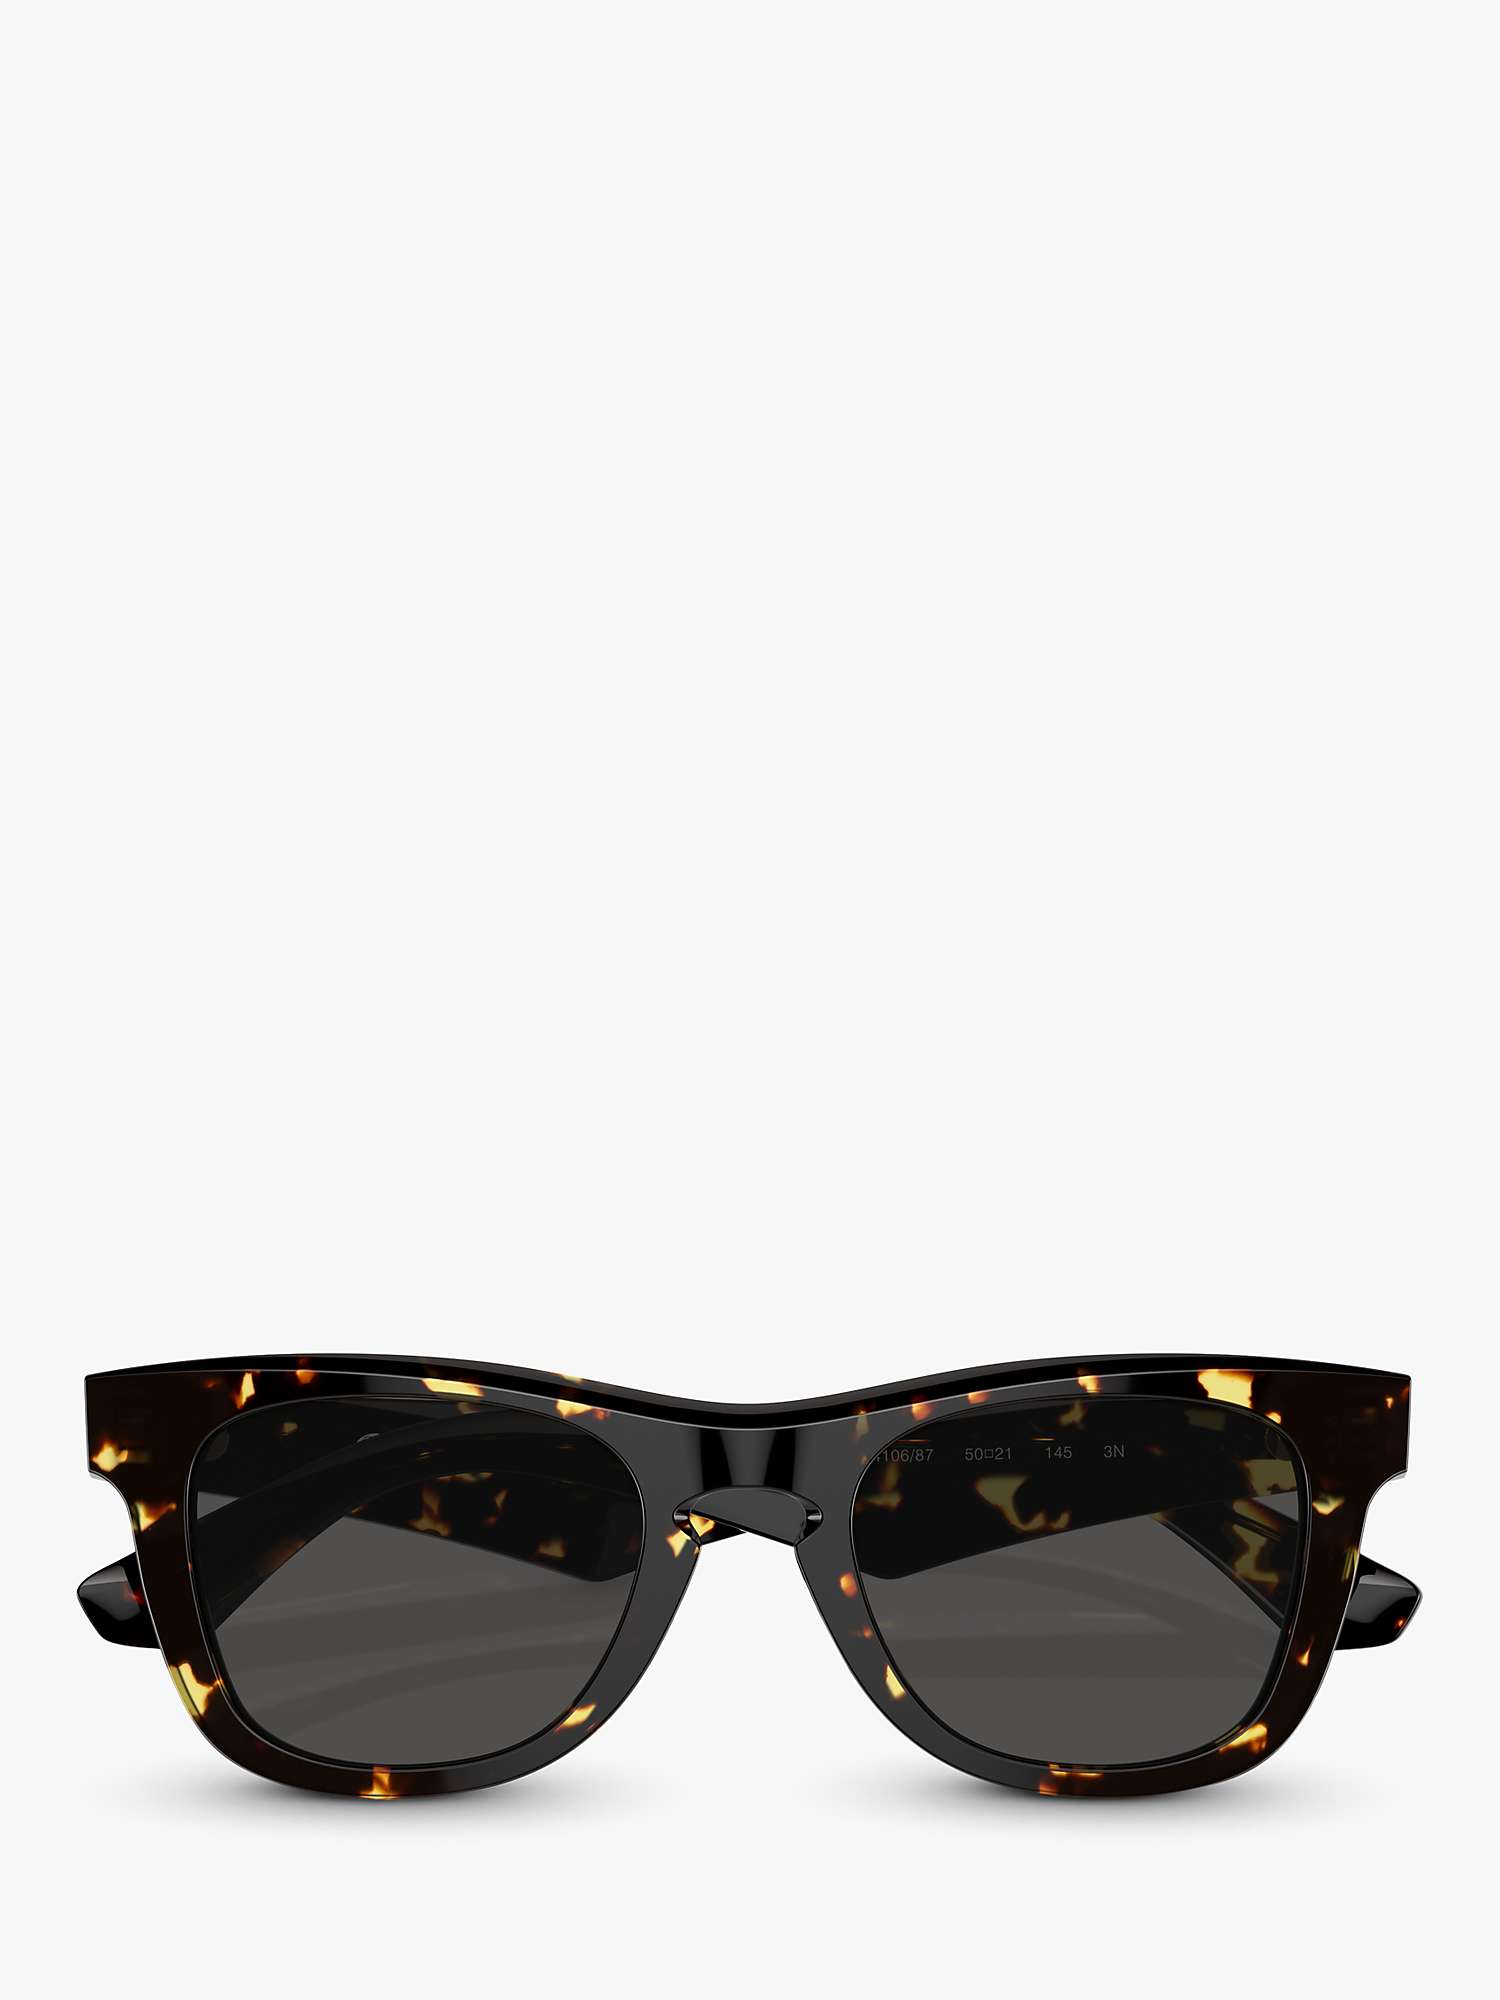 Buy Burberry BE4426 Men's D-Frame Sunglasses, Dark Havana/Grey Online at johnlewis.com